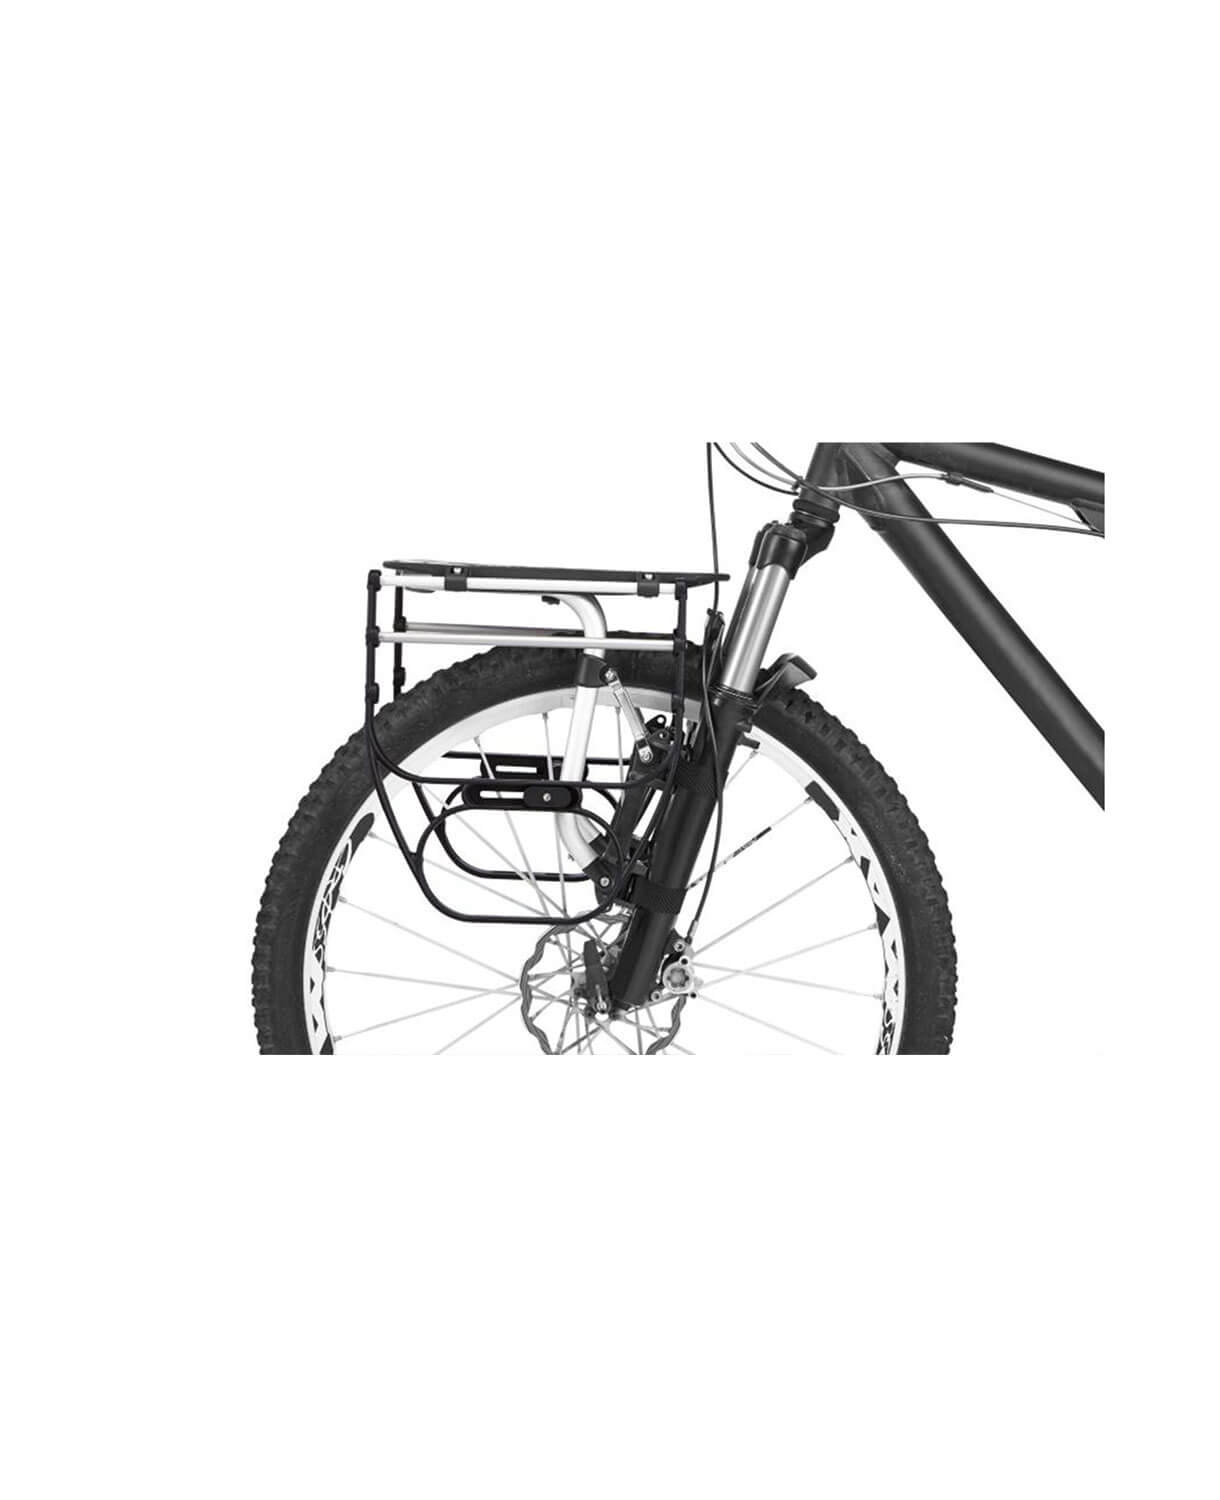 Thule EasyFold XT 3  SpielRadl Jenbach - Onlineshop für Fahrräder in Tirol